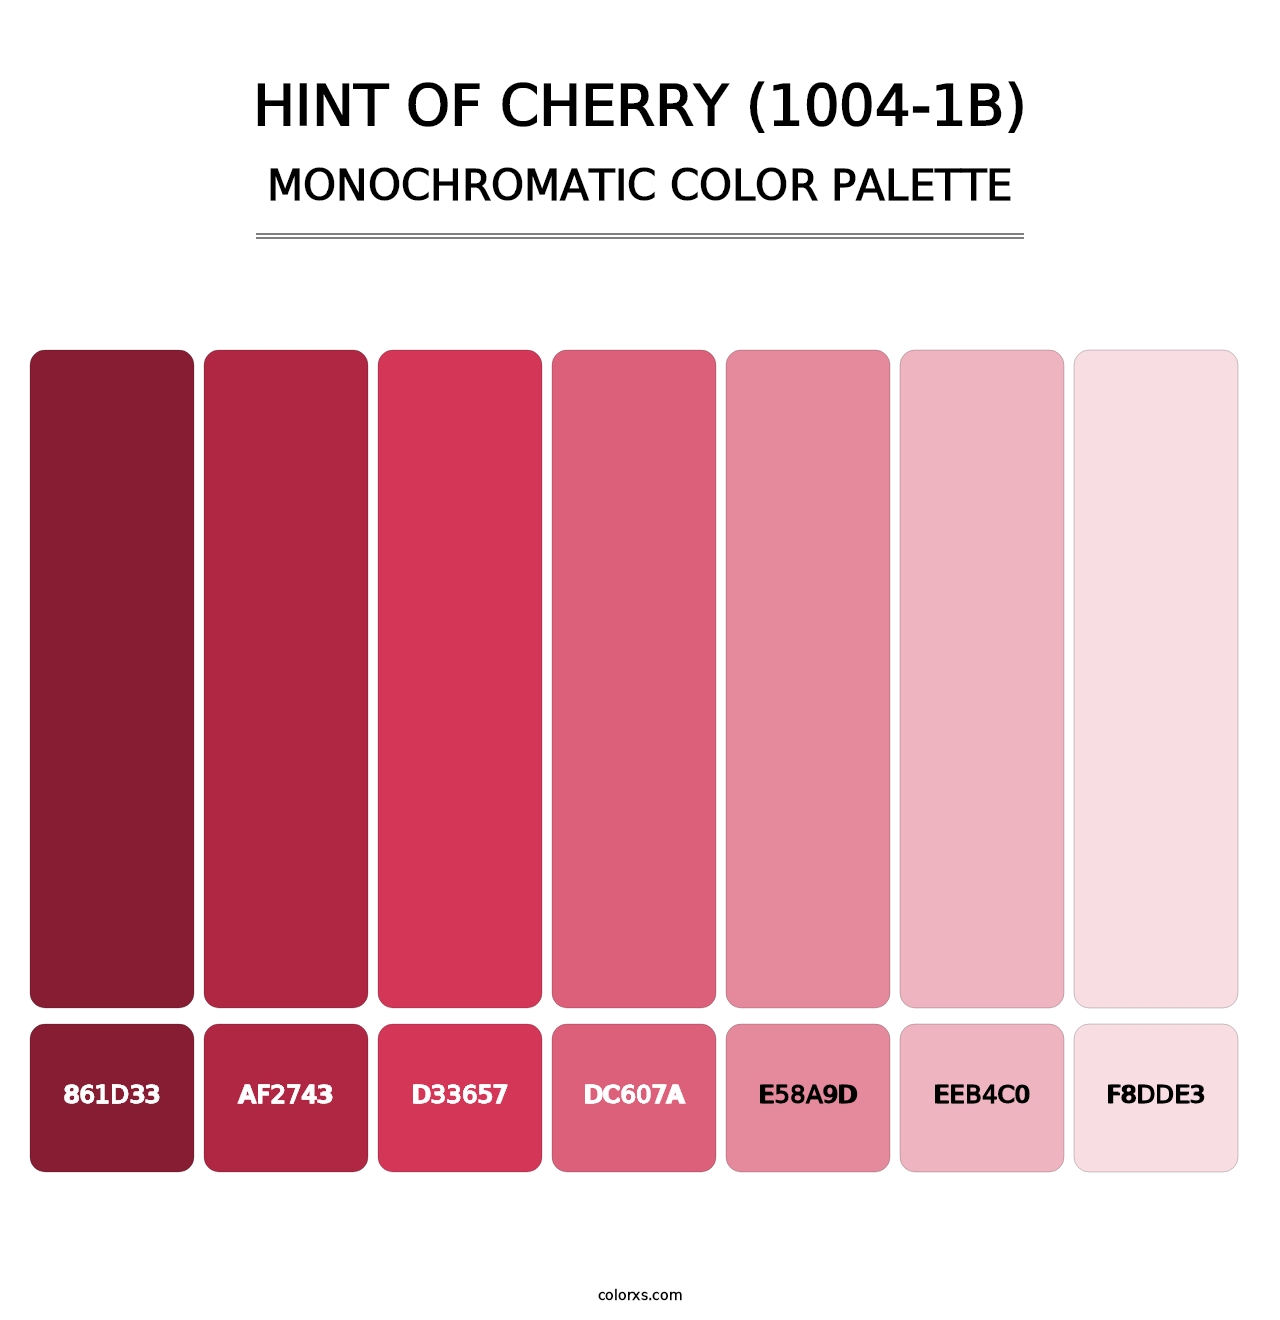 Hint of Cherry (1004-1B) - Monochromatic Color Palette